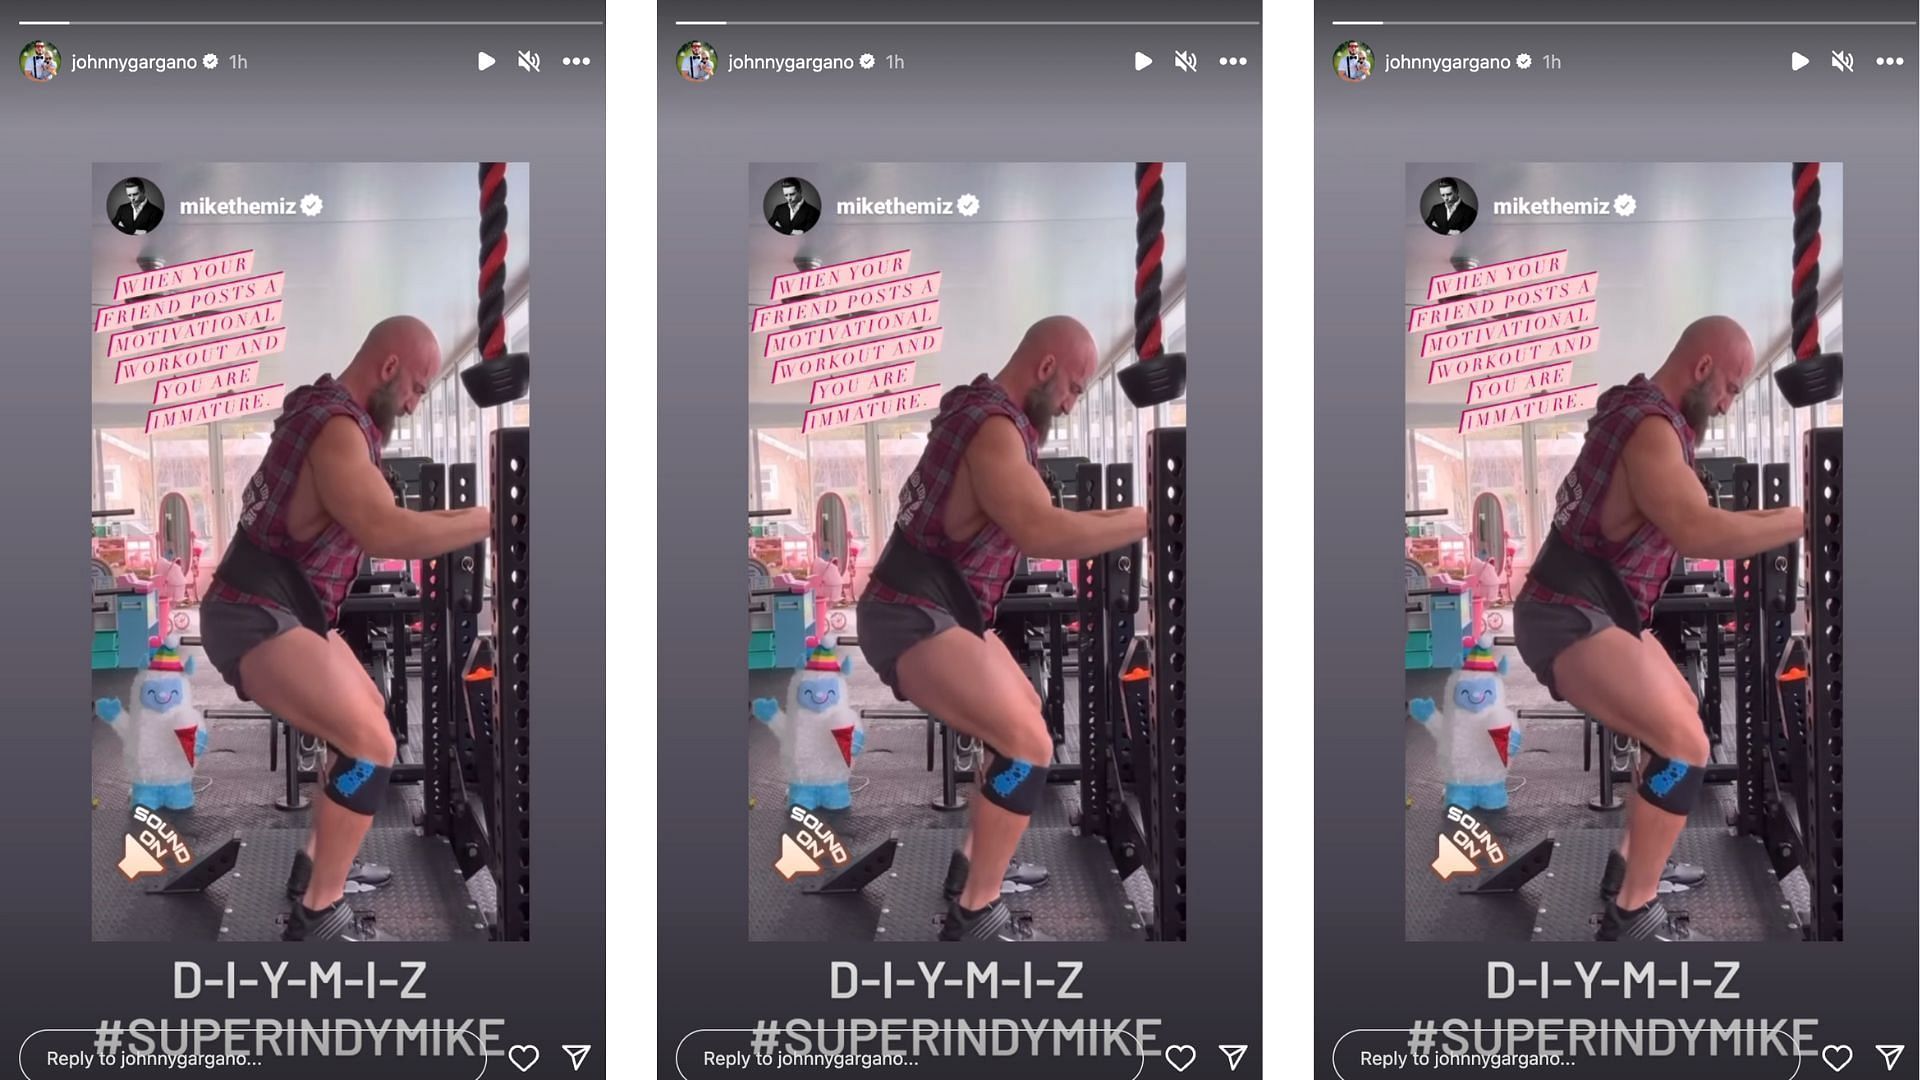 Garagano reacts to Miz's humorous video on Instagram